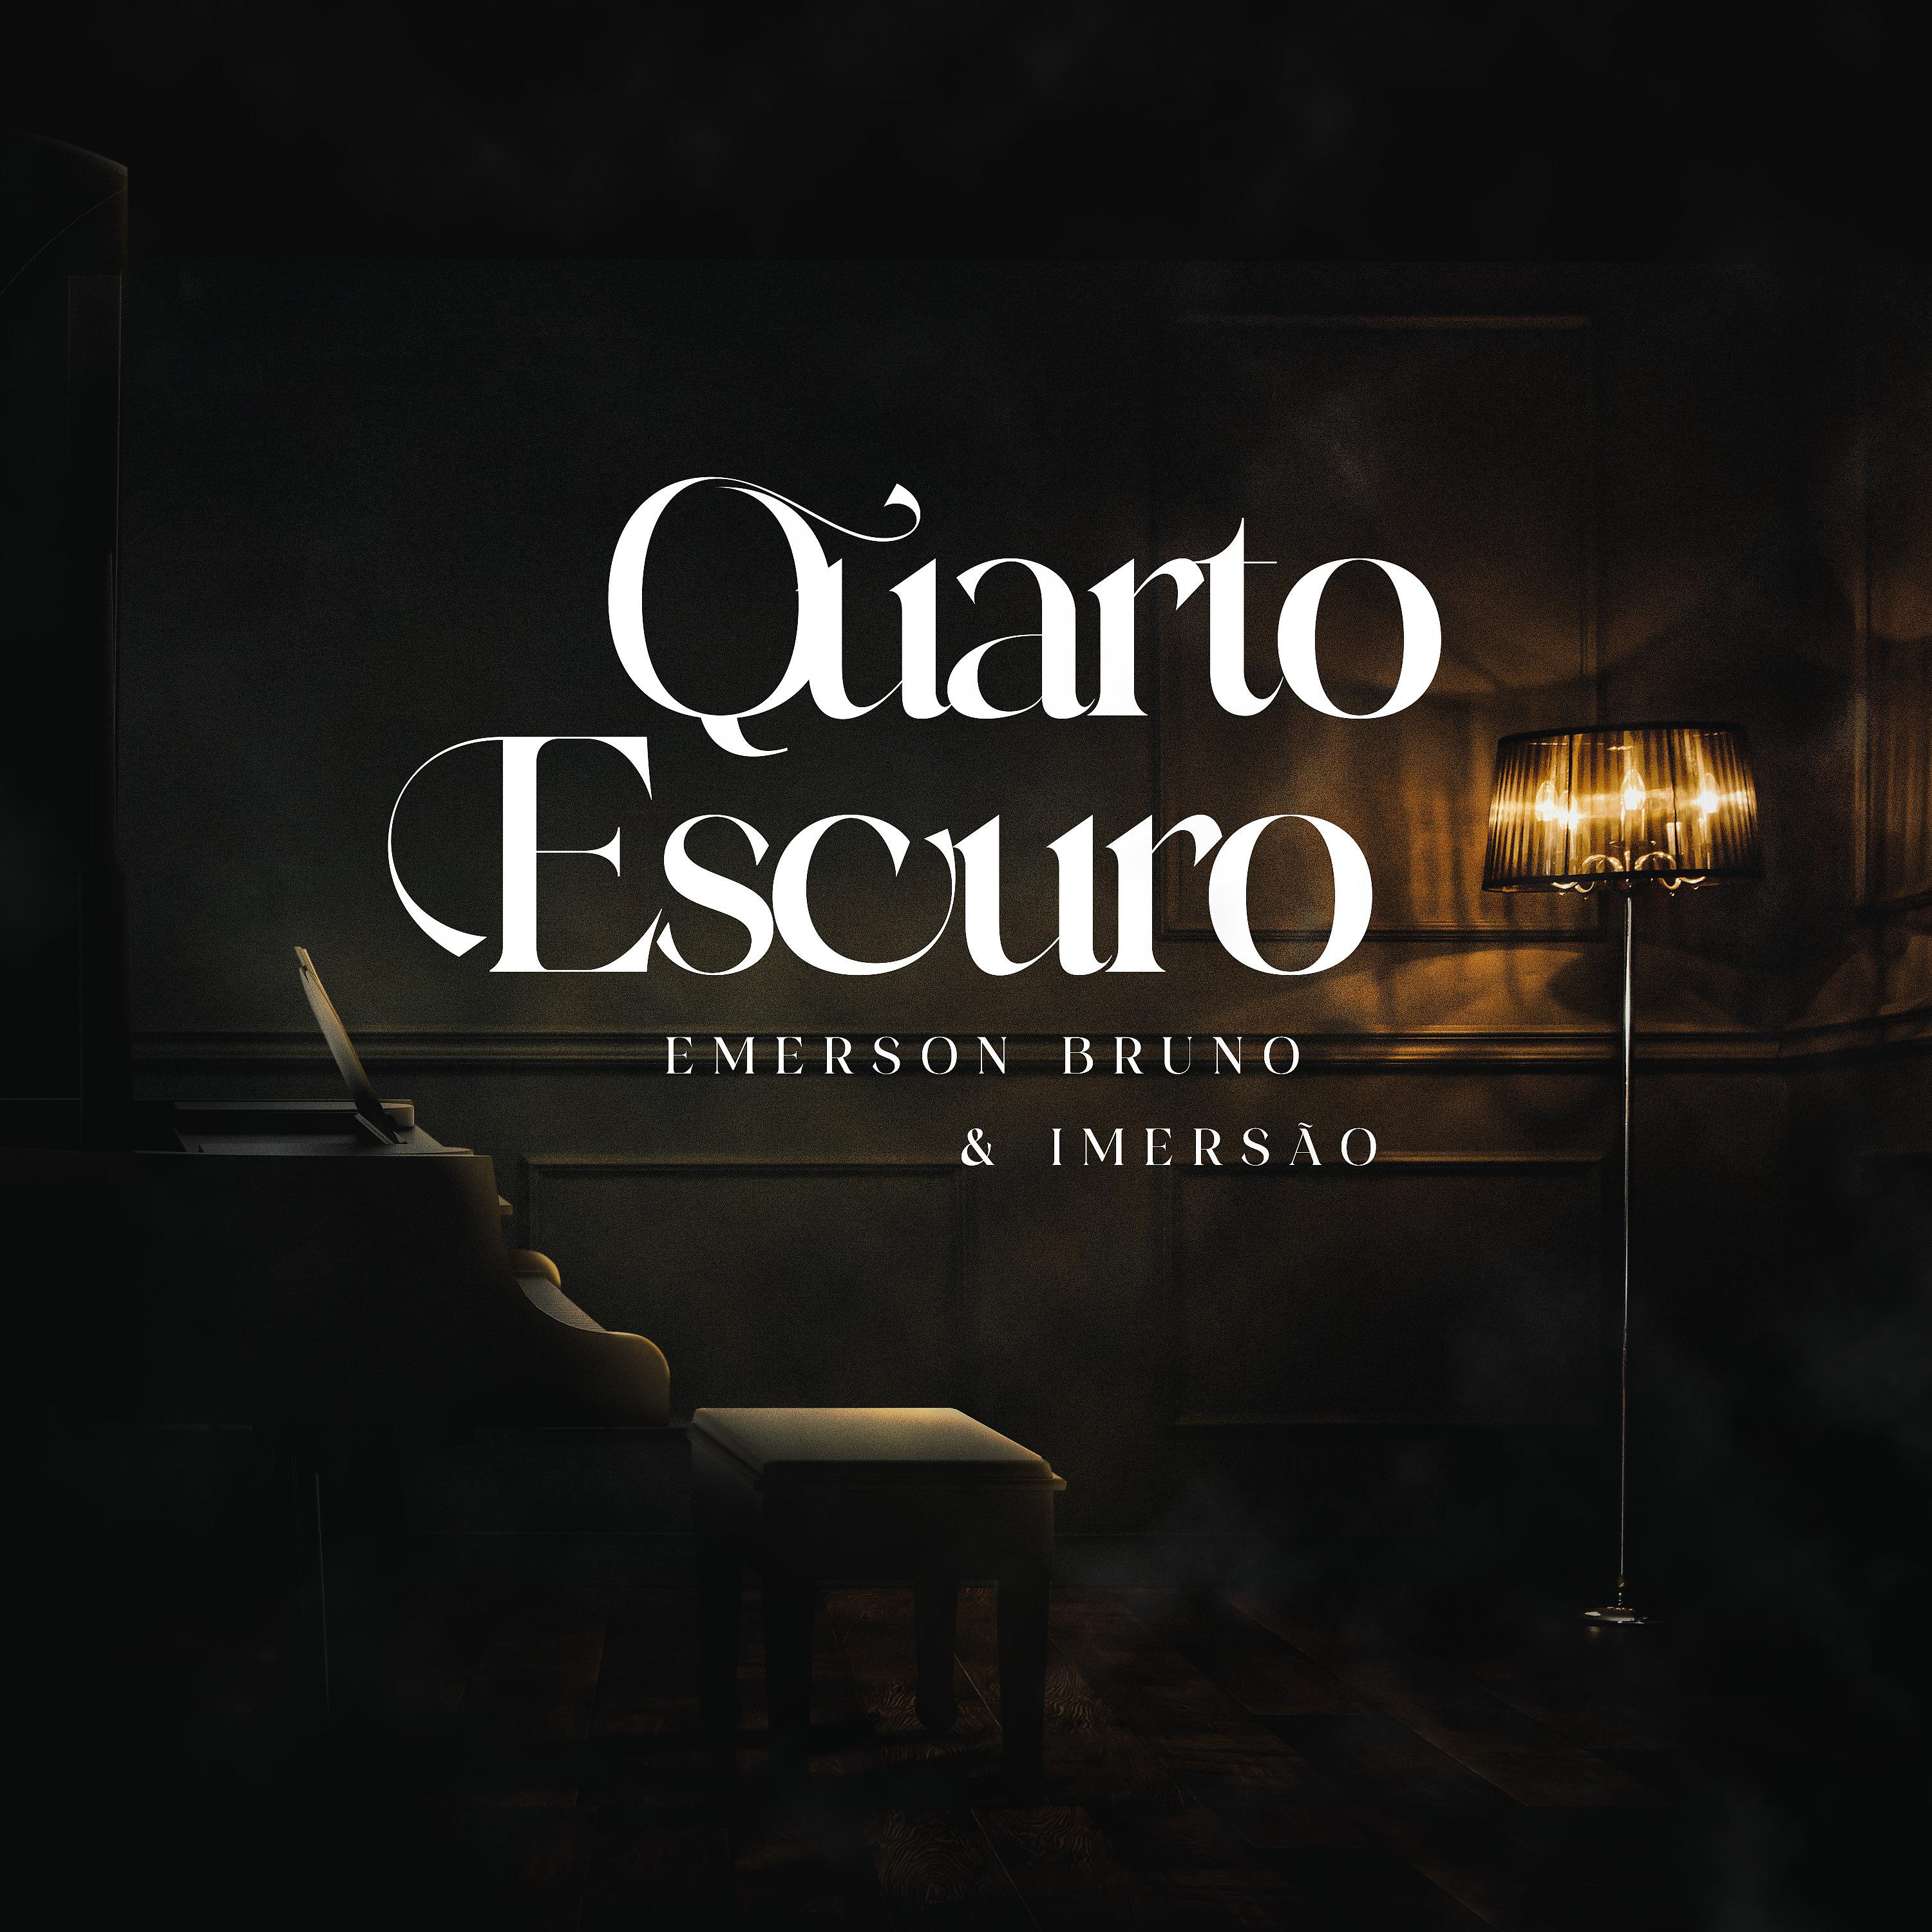 Постер альбома Quarto Escuro